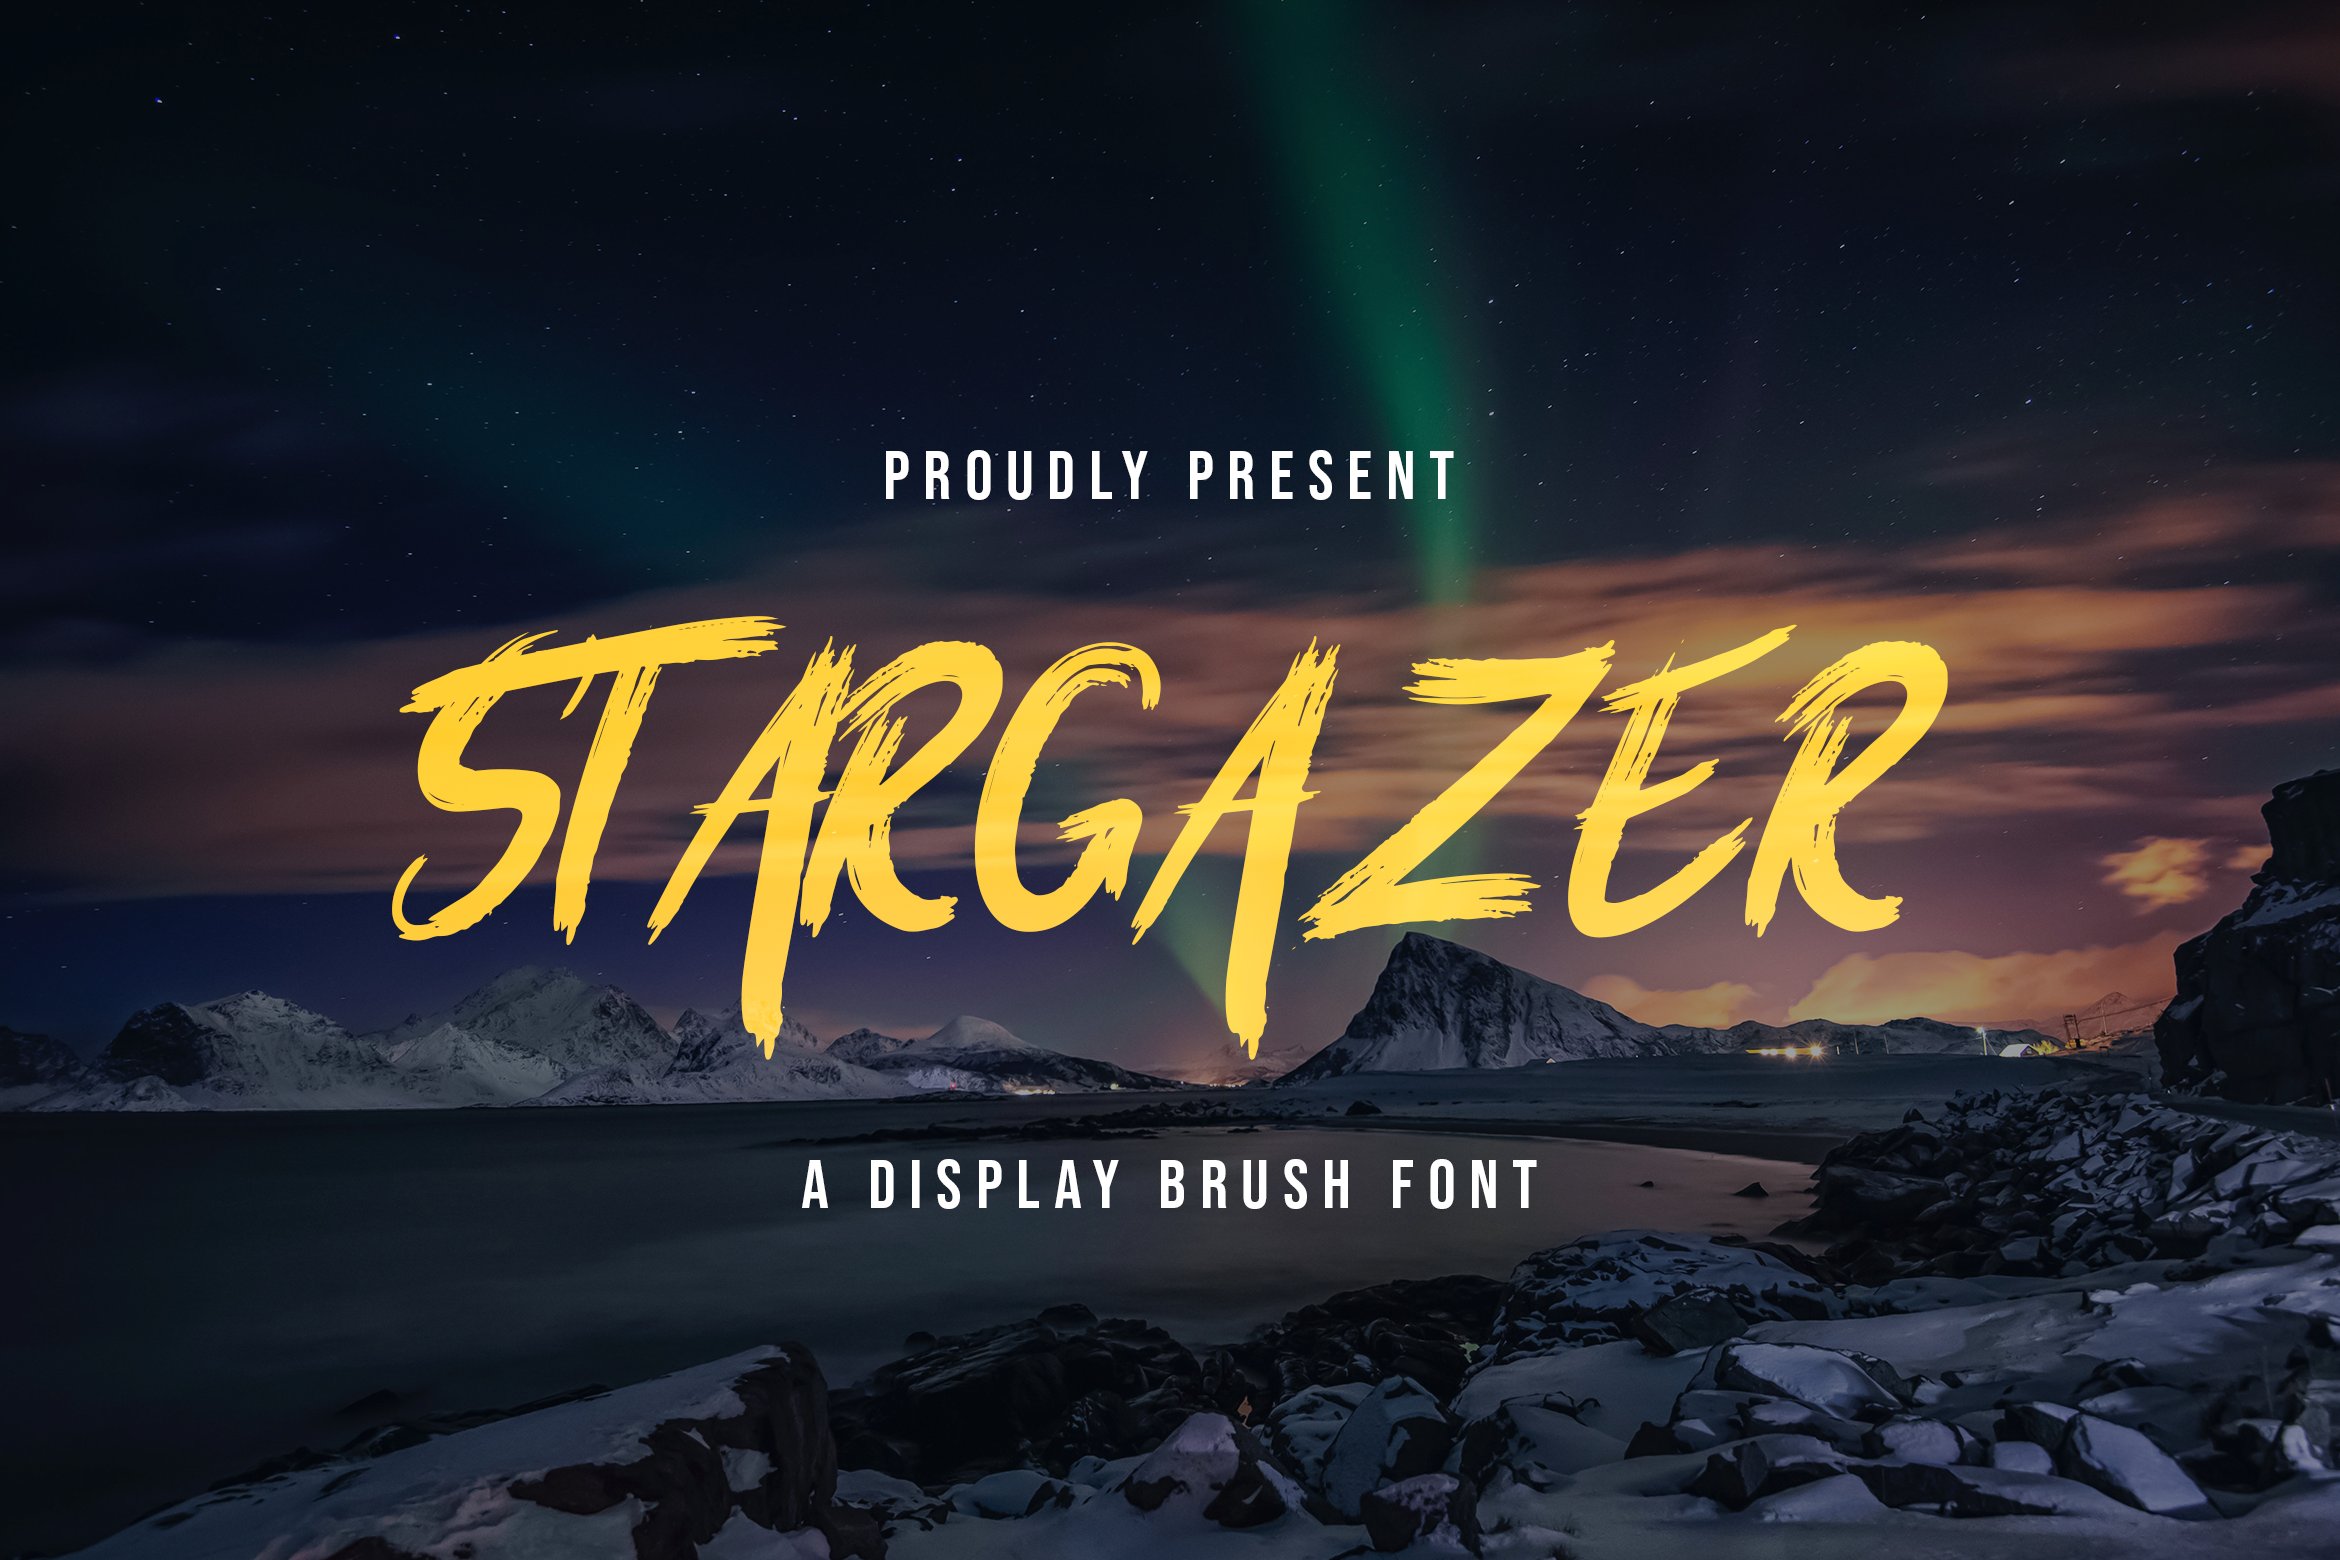 Stargaze - Creative Brush Font cover image.